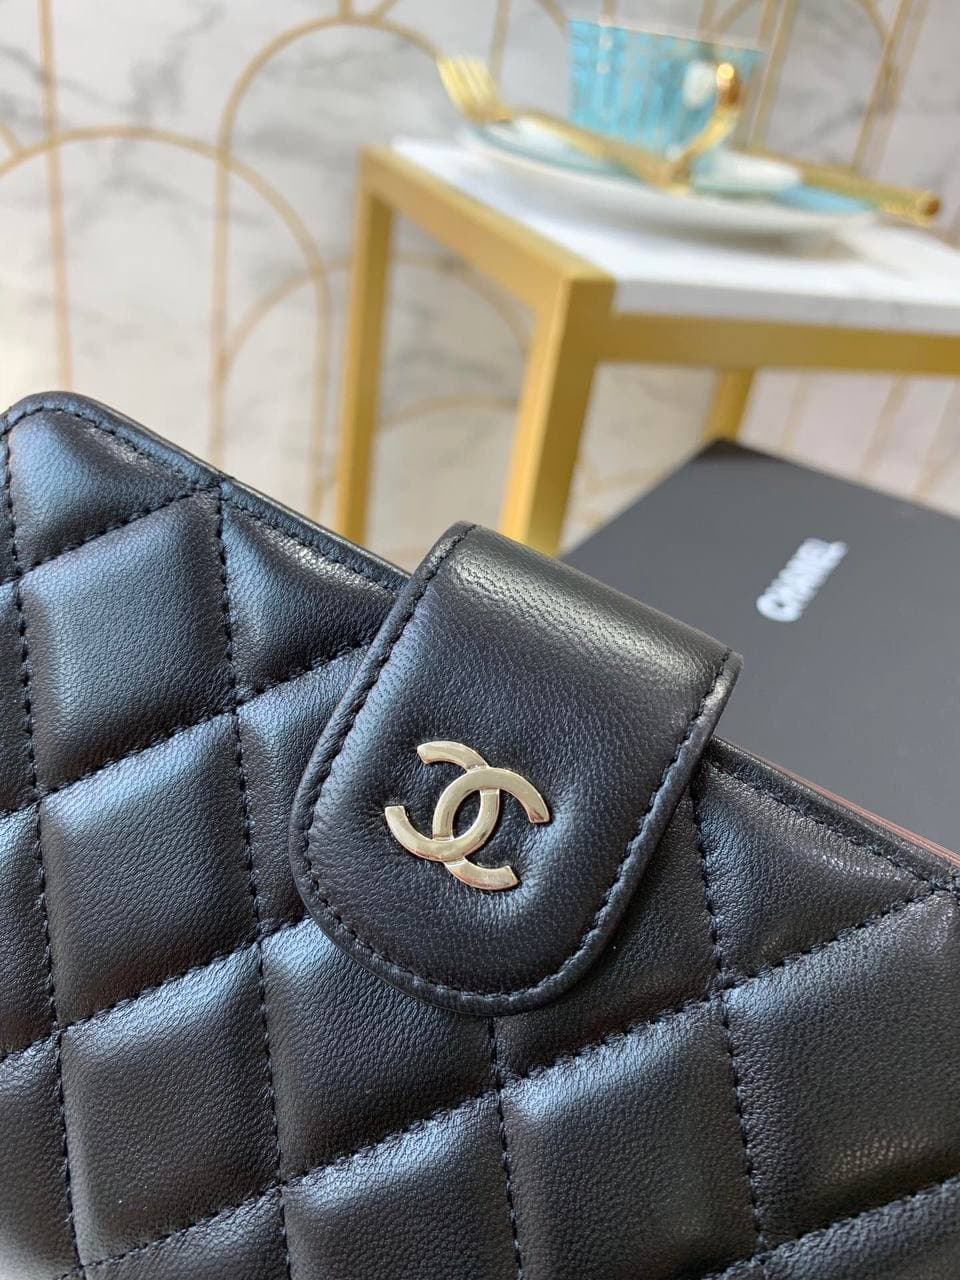 Кошелёк Chanel